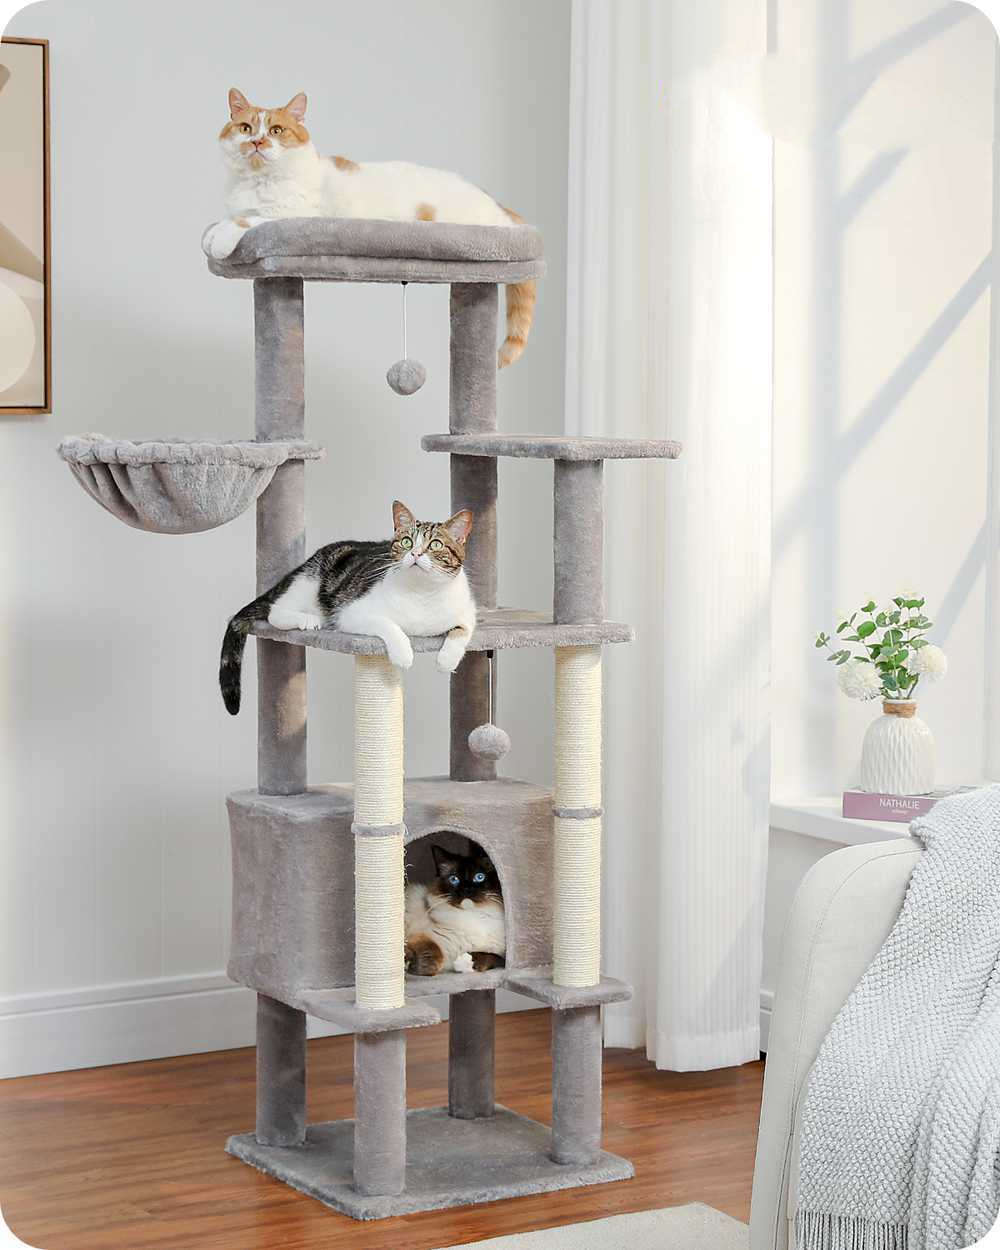 Cat Towers latest model! - Blog - 2